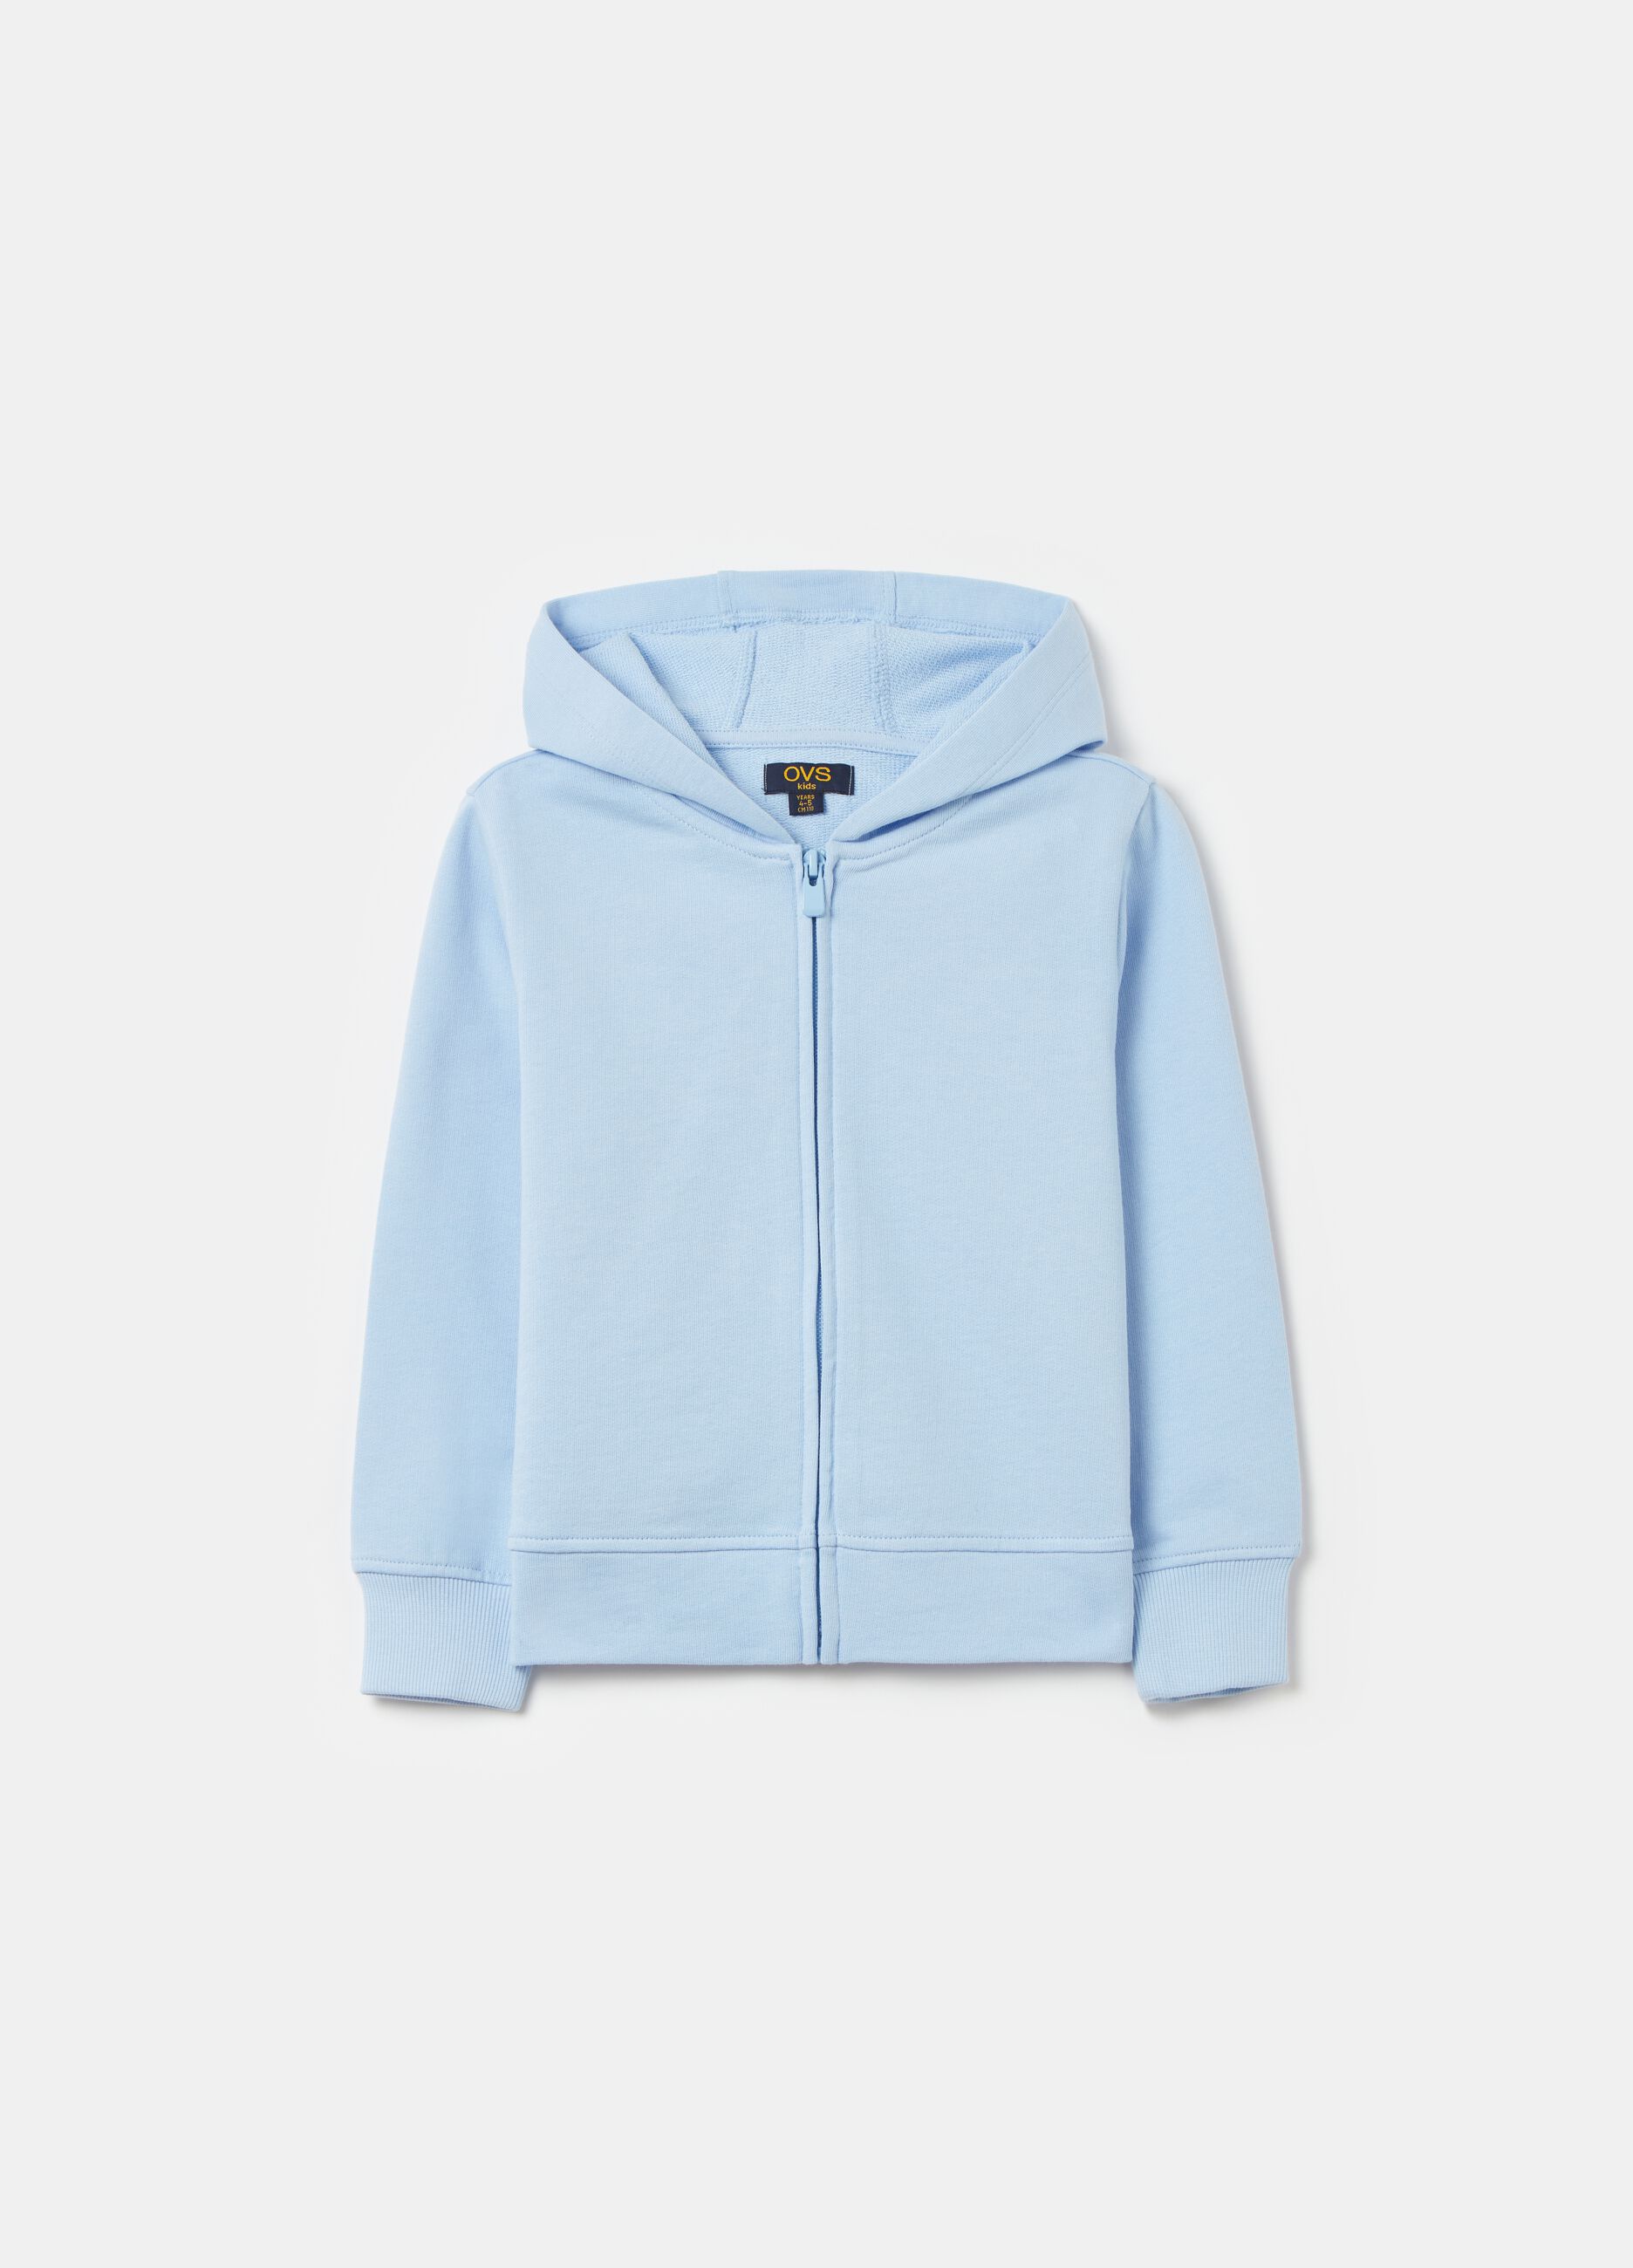 French terry full-zip hoodie